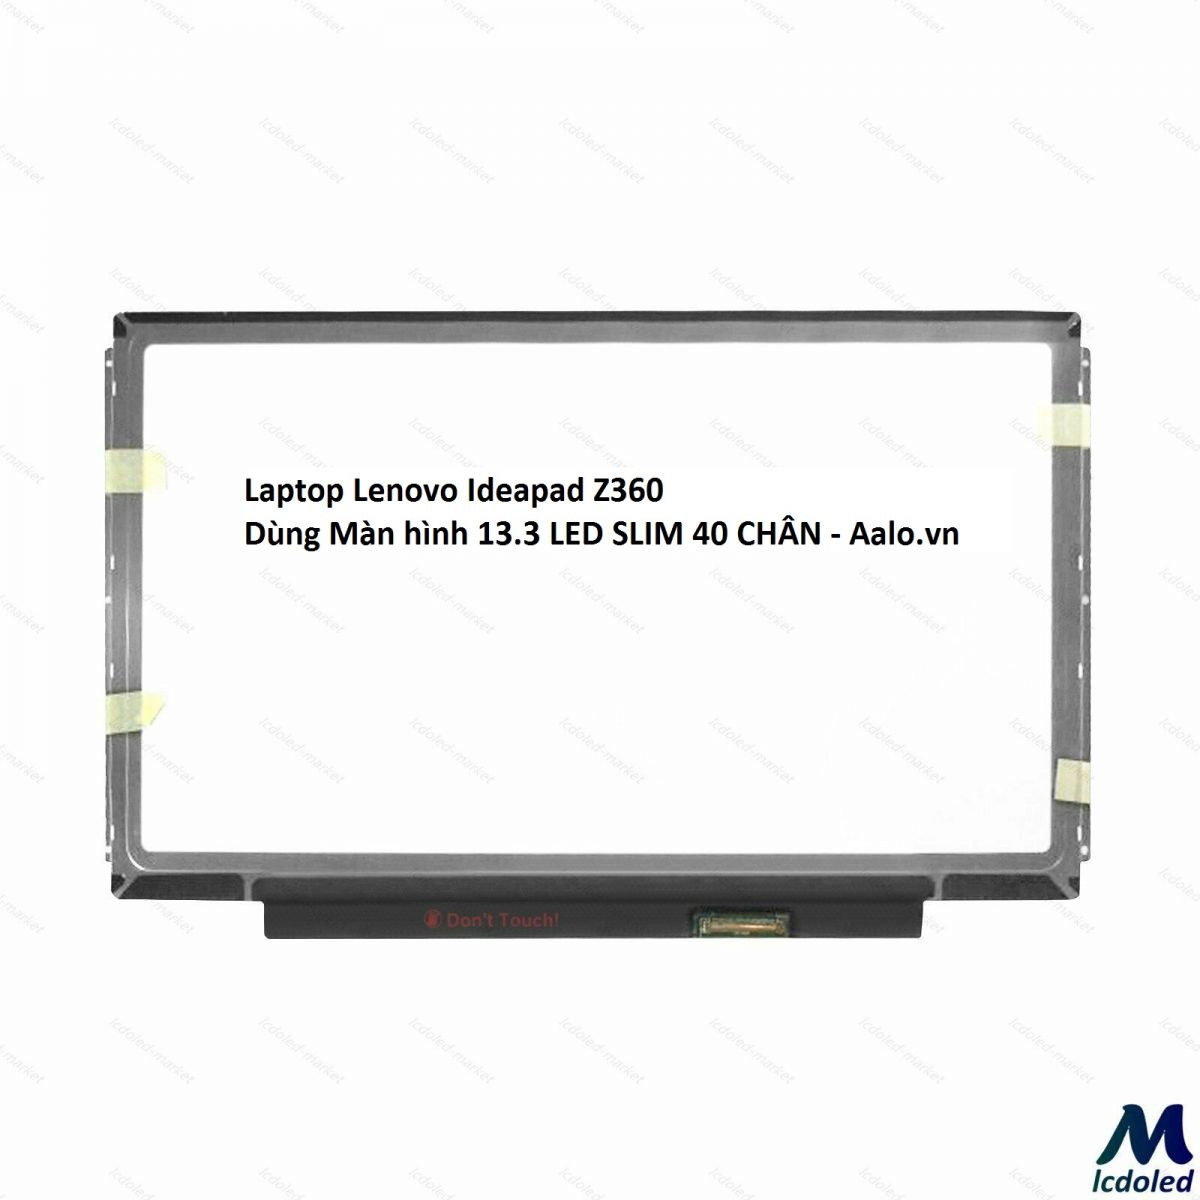 Màn hình Laptop Lenovo Ideapad Z360 - Aalo.vn